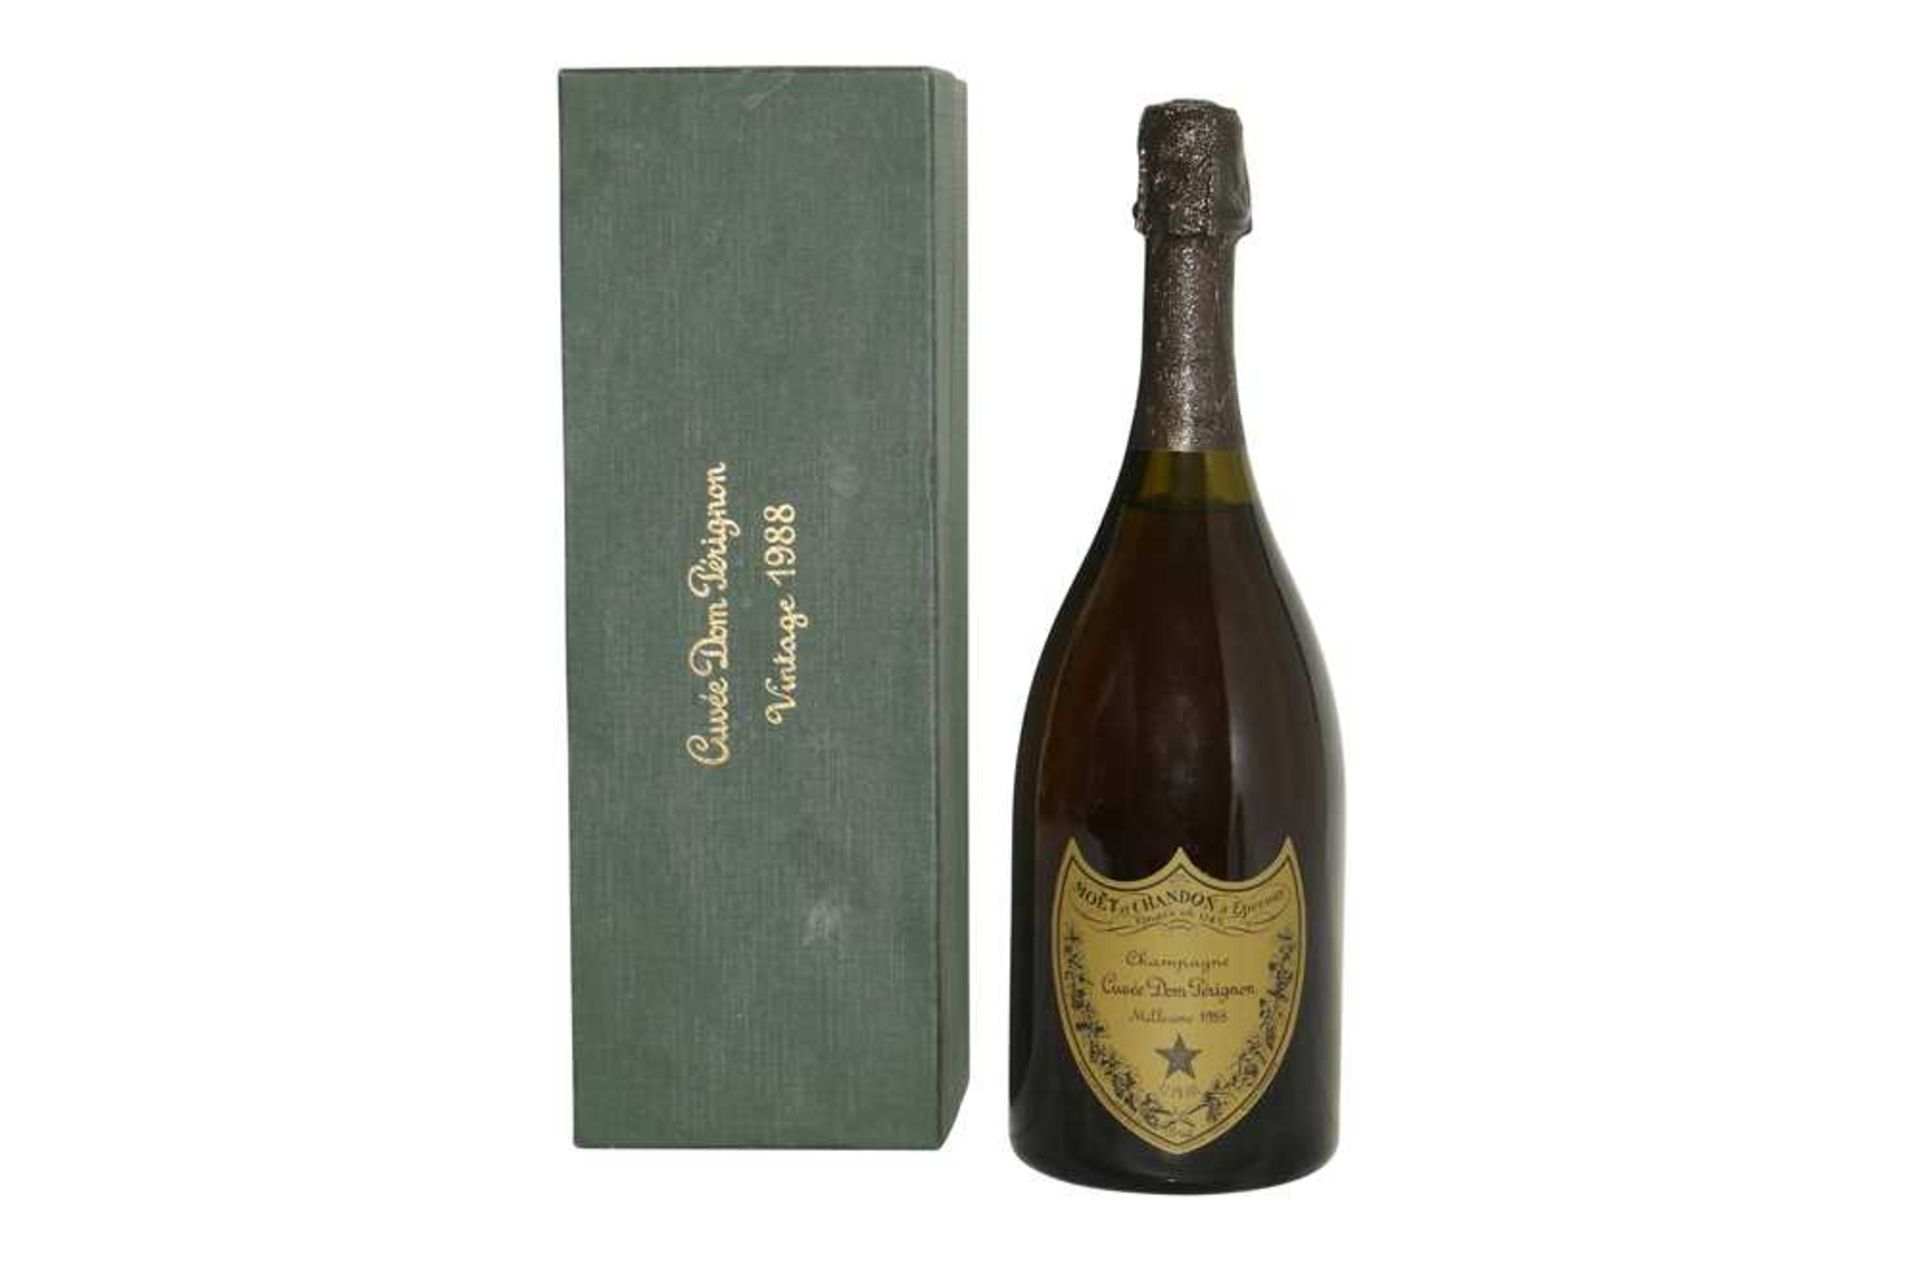 Dom Perignon, Epernay, 1988, one bottle